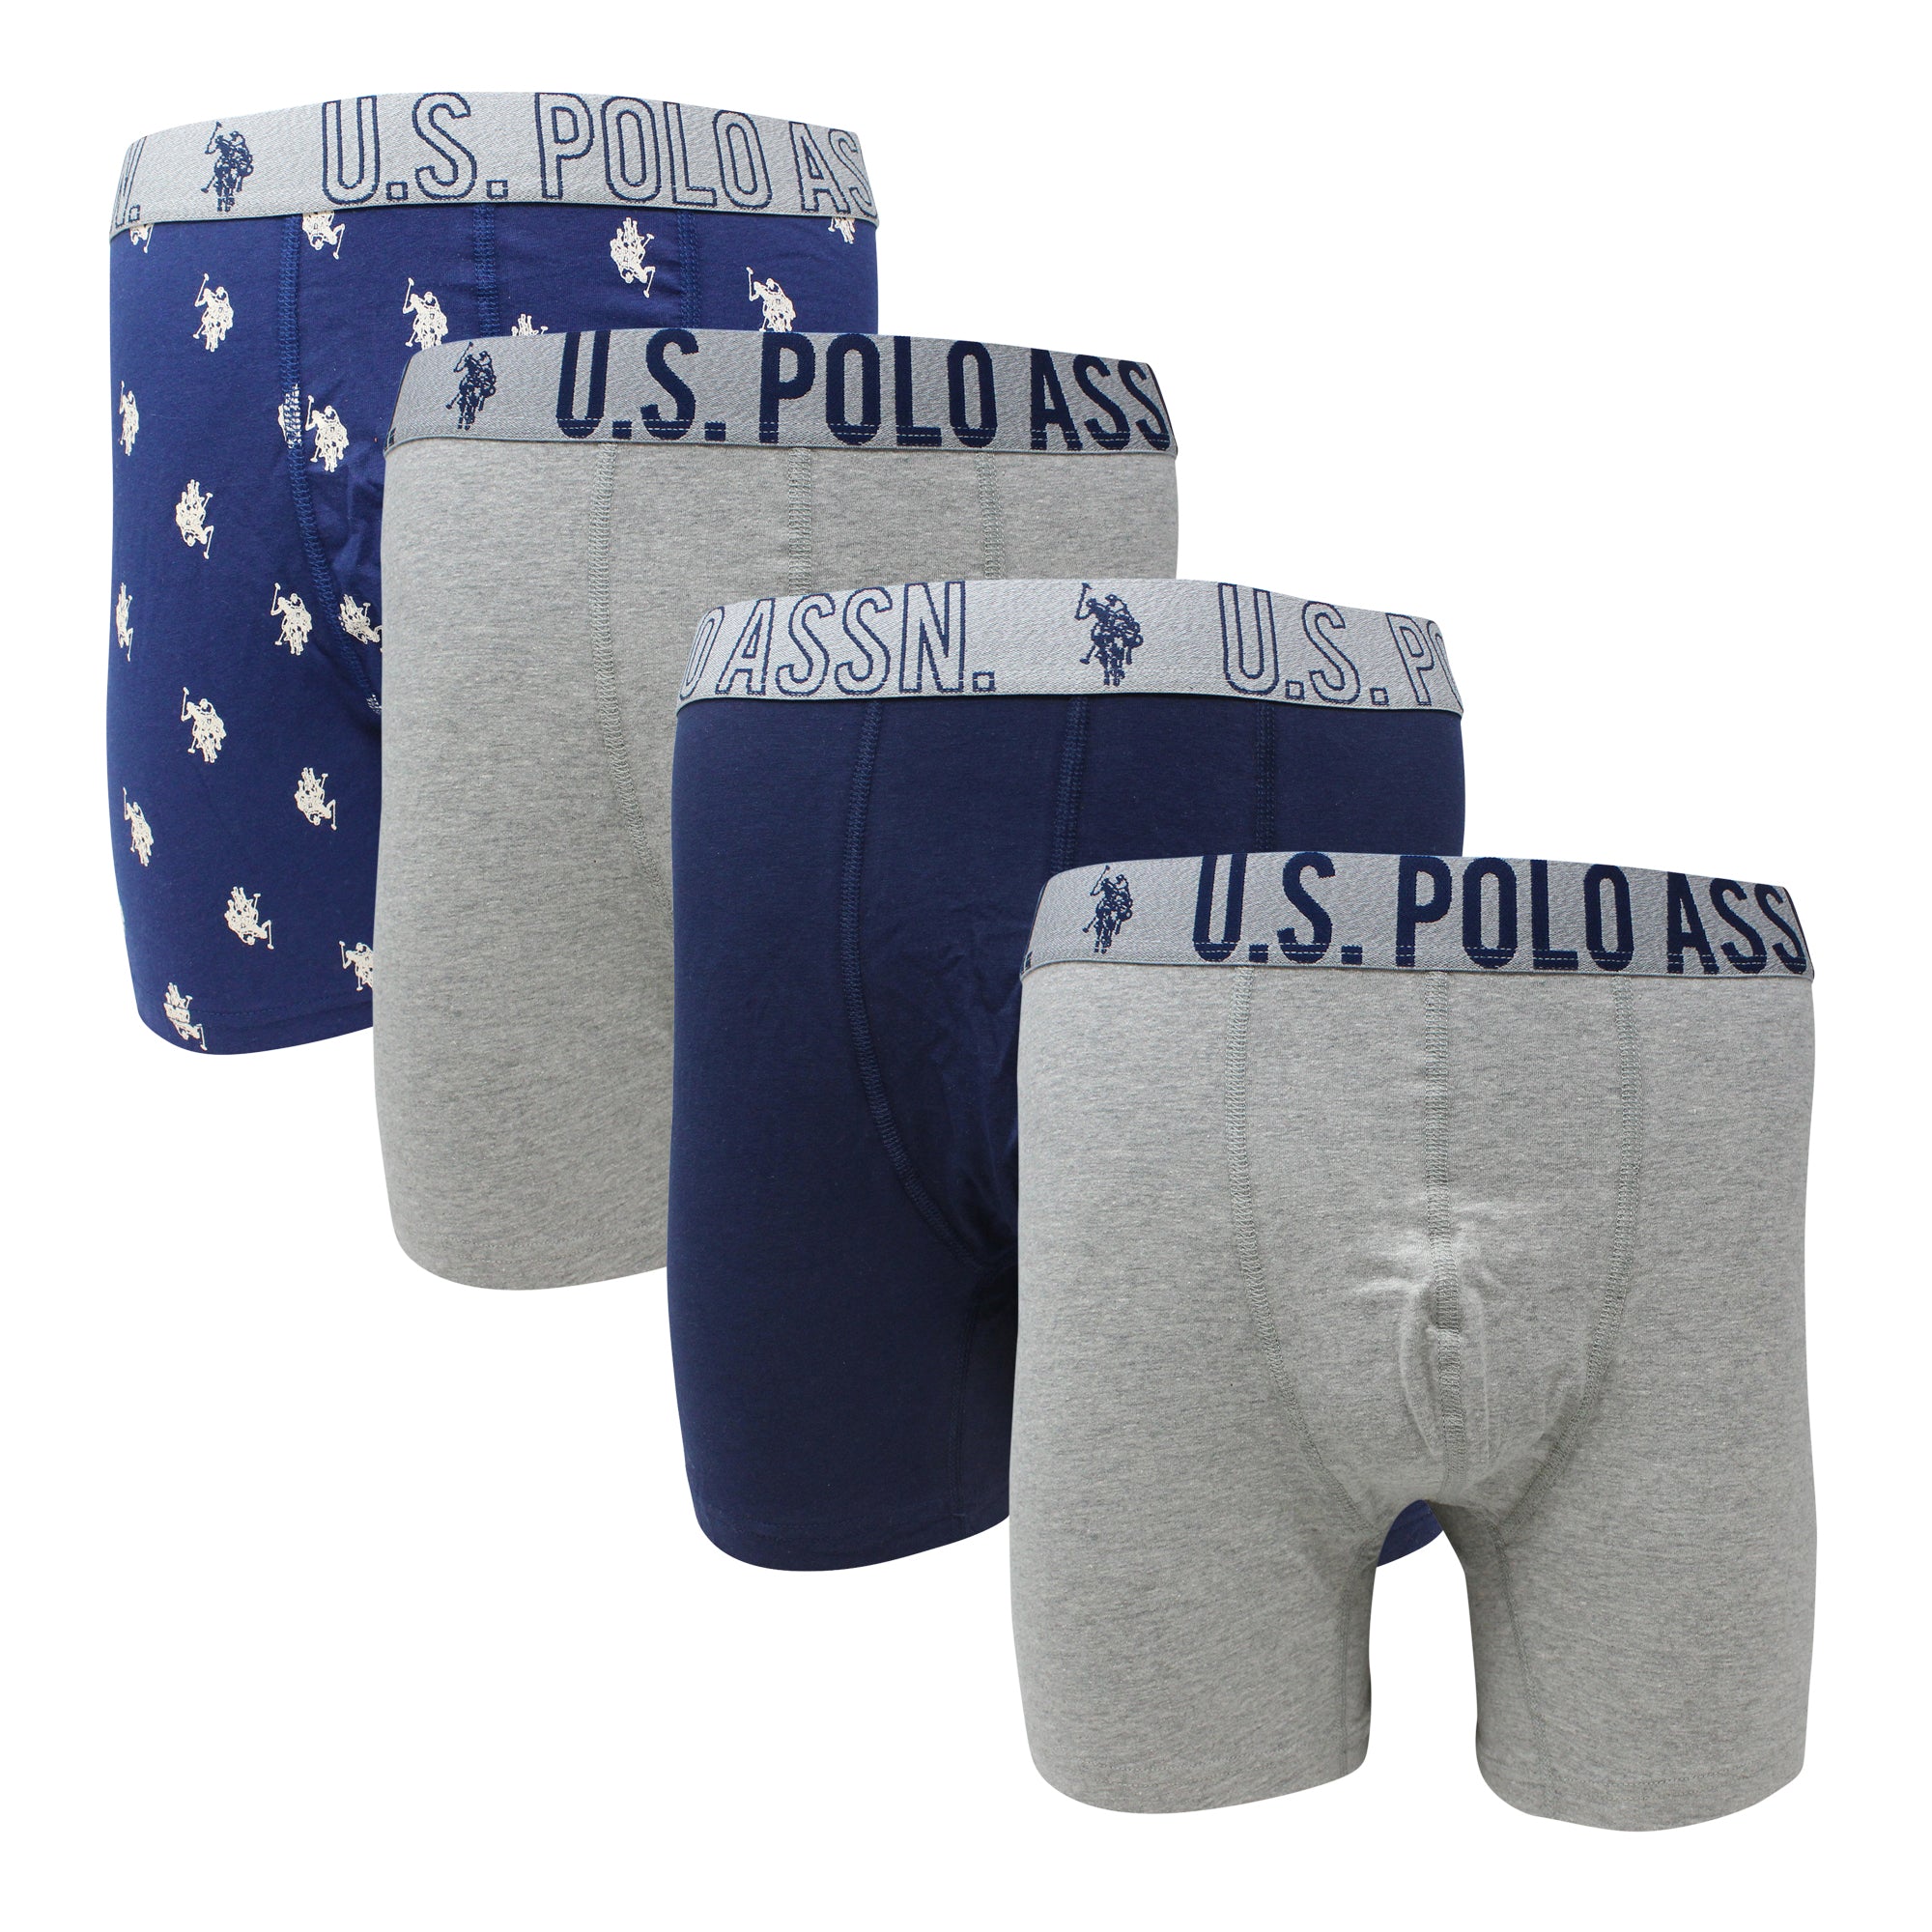 U.S. Polo Assn. Men's Cotton Stretch Mid Leg Boxer Briefs Underwear size  small